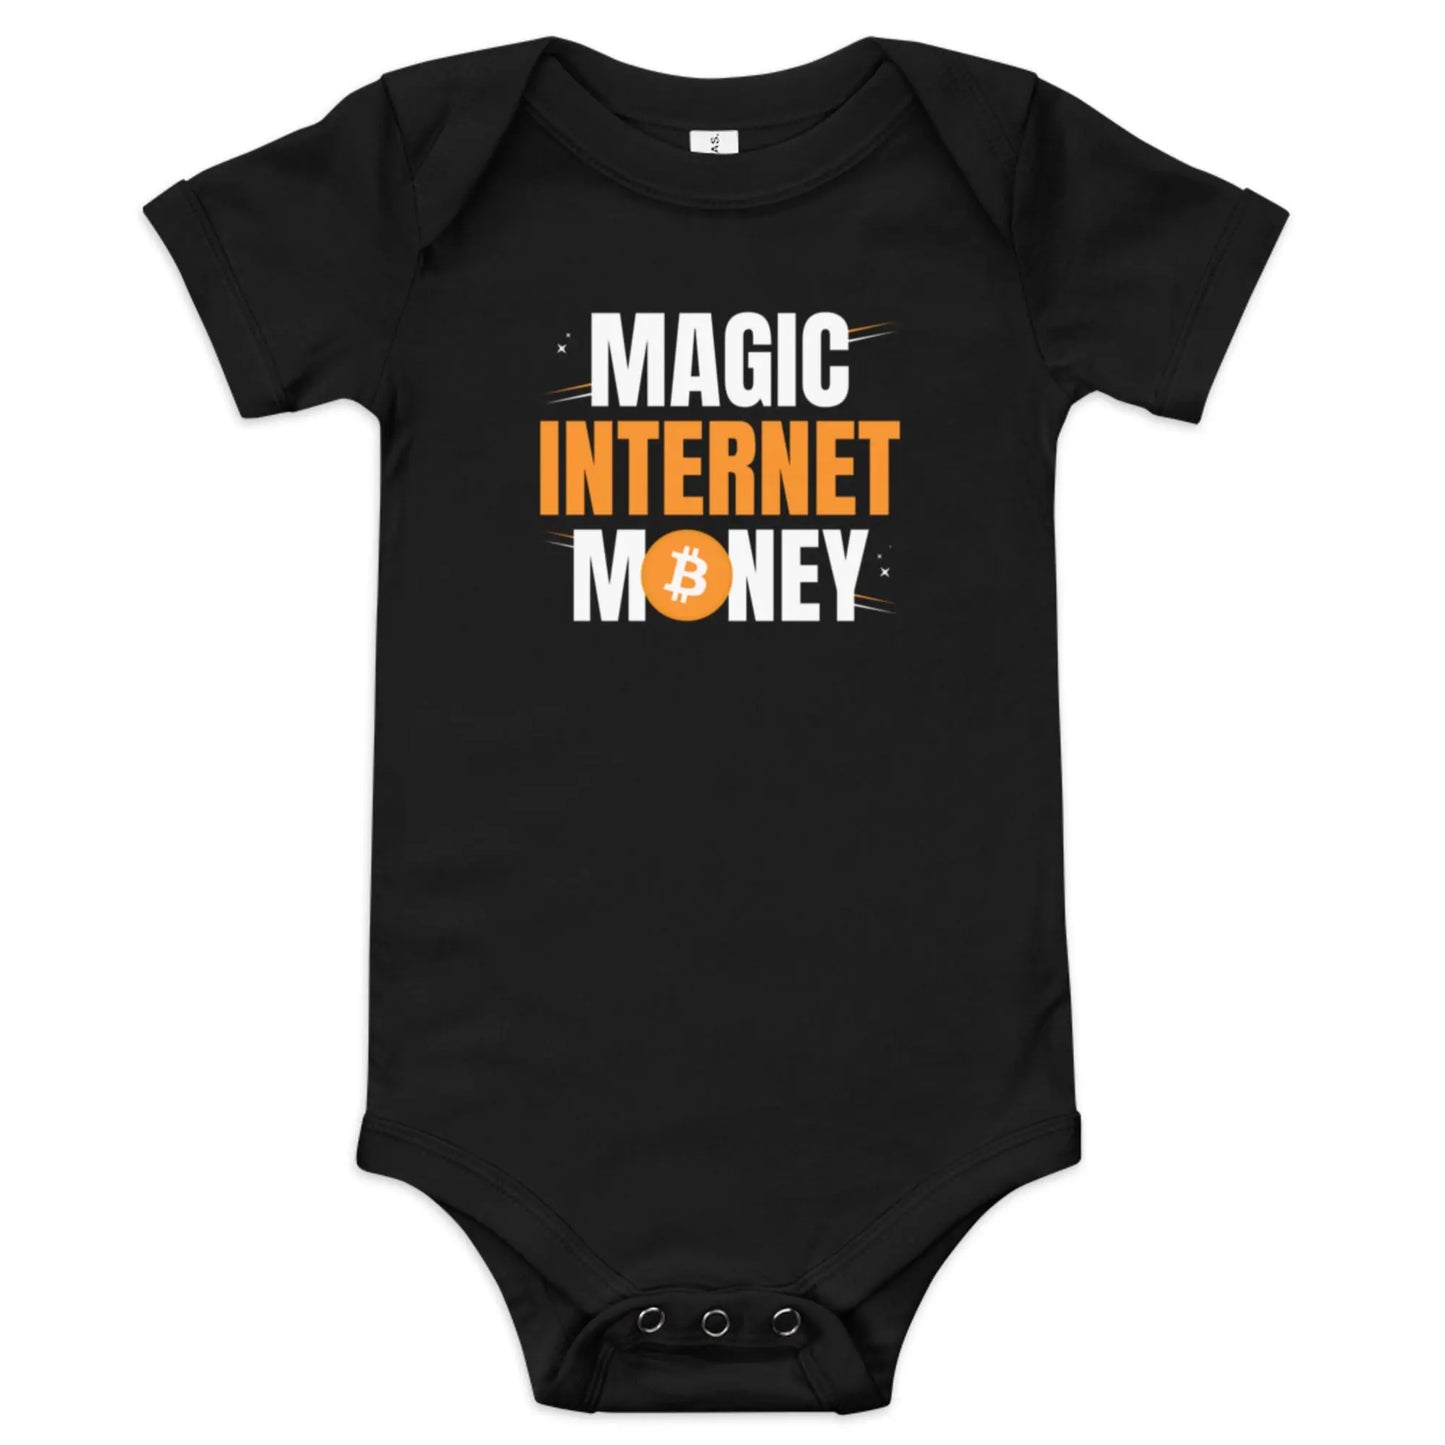 Magic Internet Money - Baby Bitcoin Body Suit Black